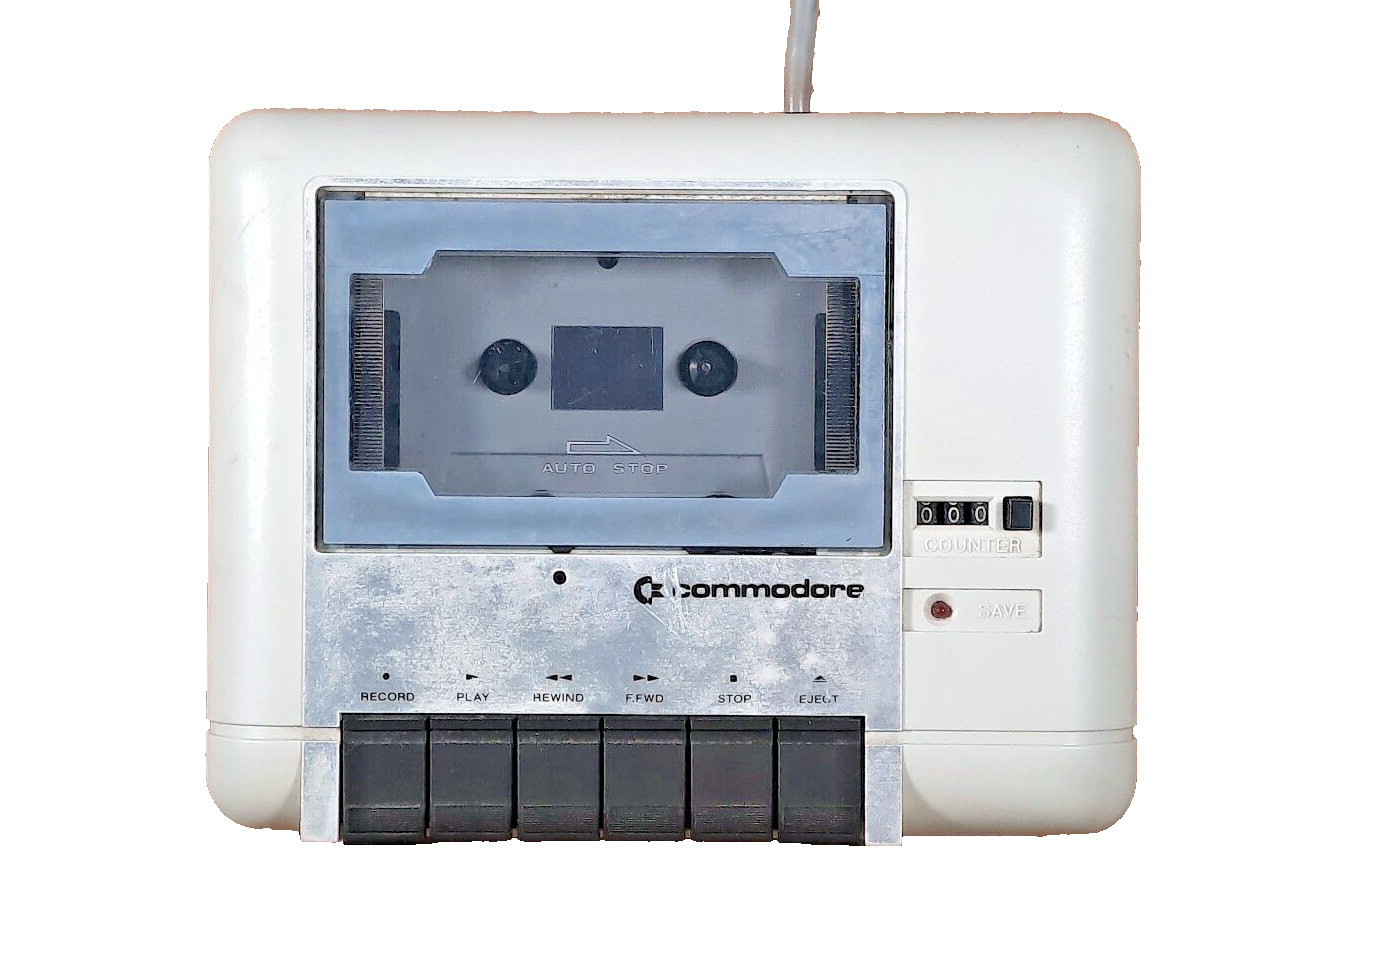 Commodore Datasette USED - C64 / C2N Unit Model 1530 Cassette / Not Tested